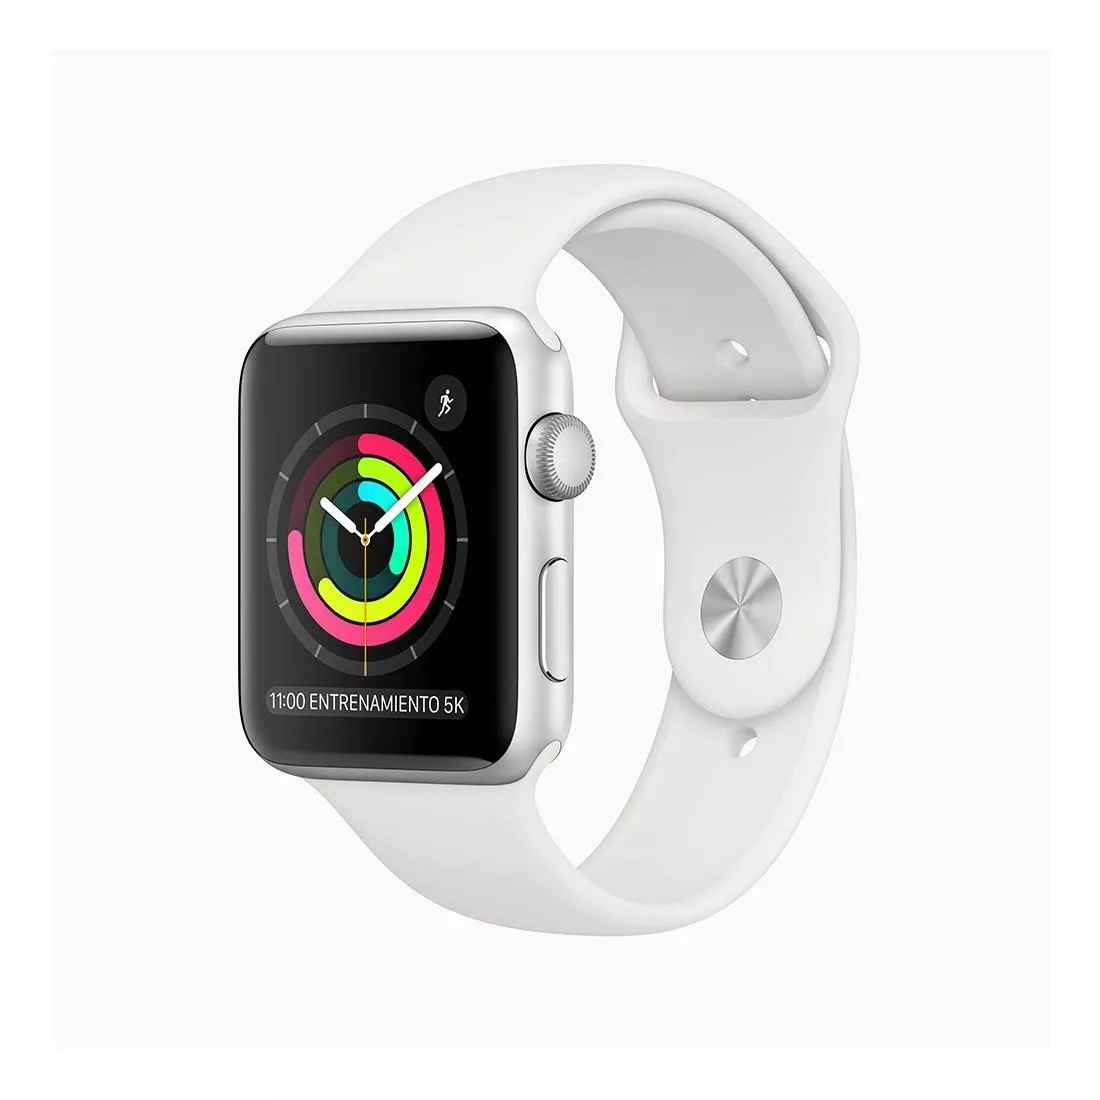 Apple Watch  Series 3 (gps) - Caja De Aluminio Plateado De 42 Mm - Correa Deportiva Blanco